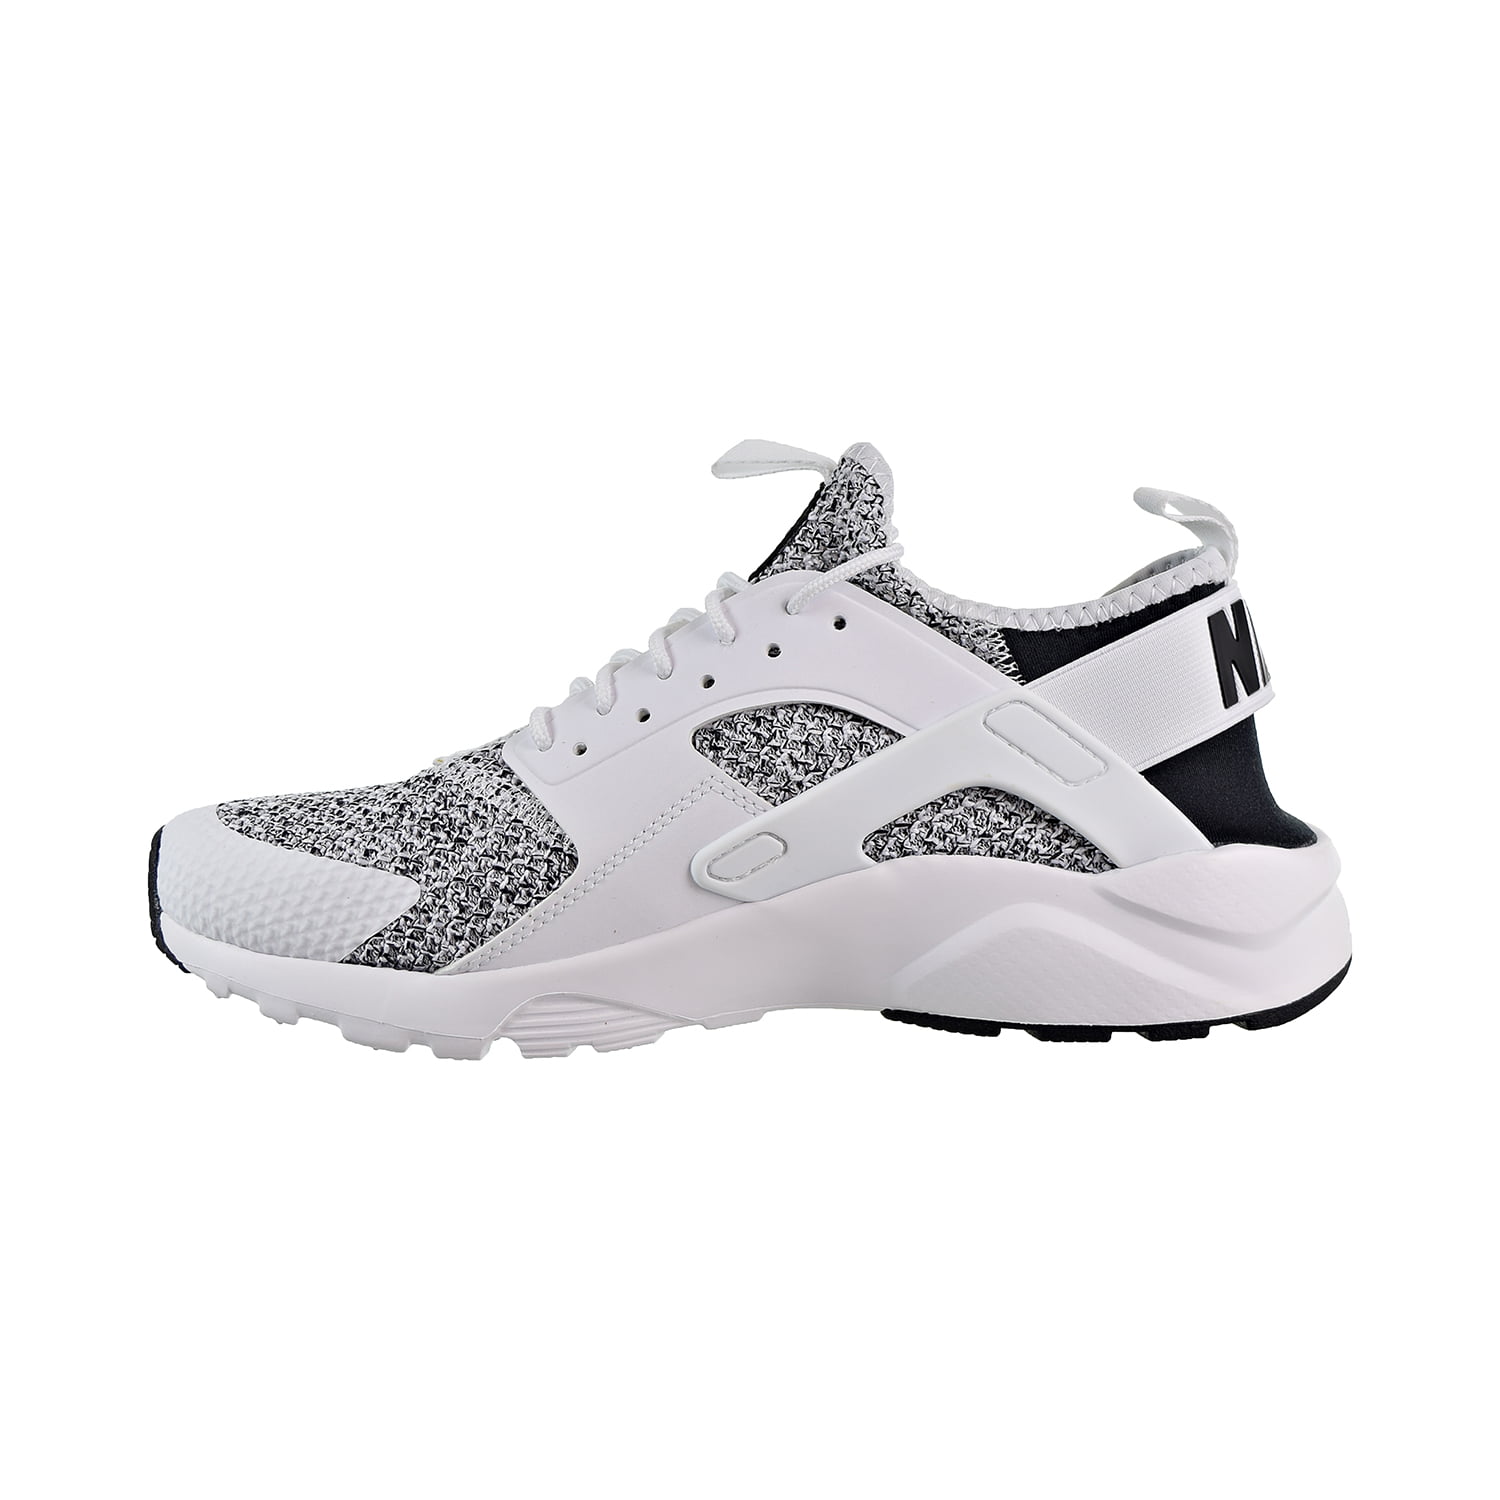 Nike Air Run Ultra SE Men's Shoes Black/White 875841-009 - Walmart.com